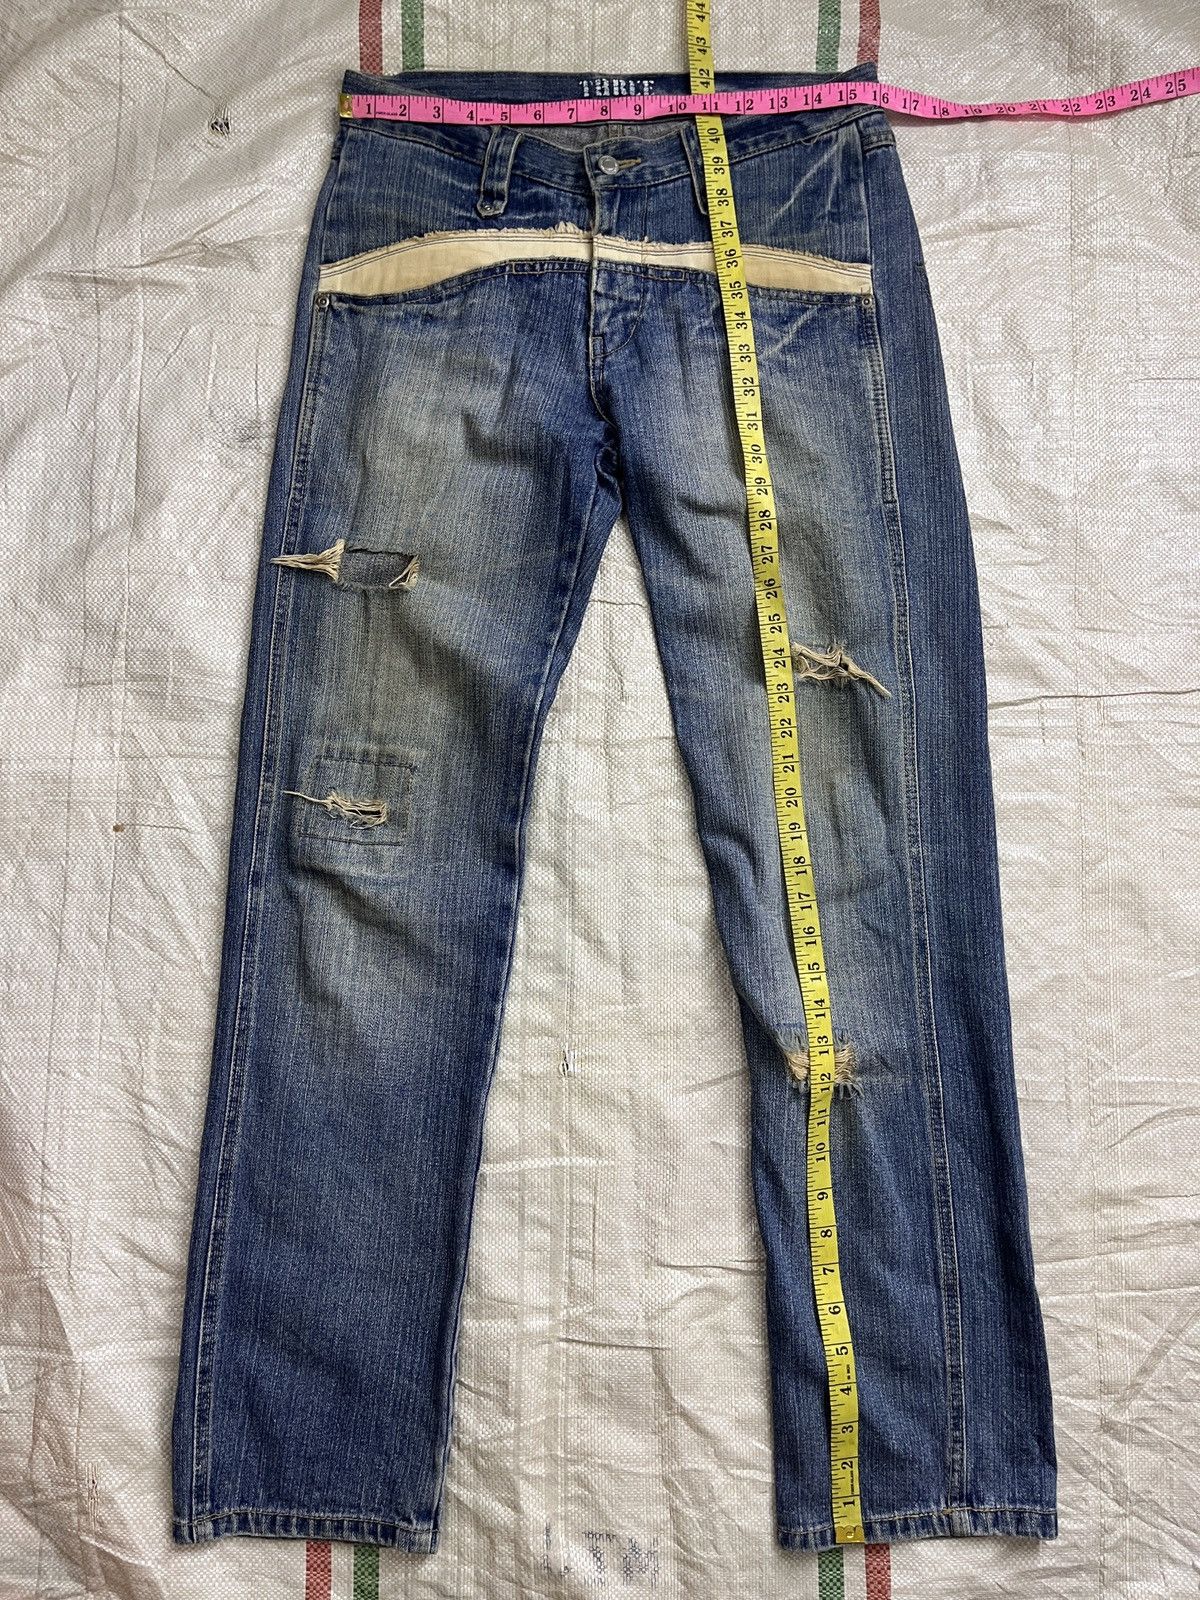 Ripped Three Stones Throw Denim Jeans Avant Garde Pockets - 4